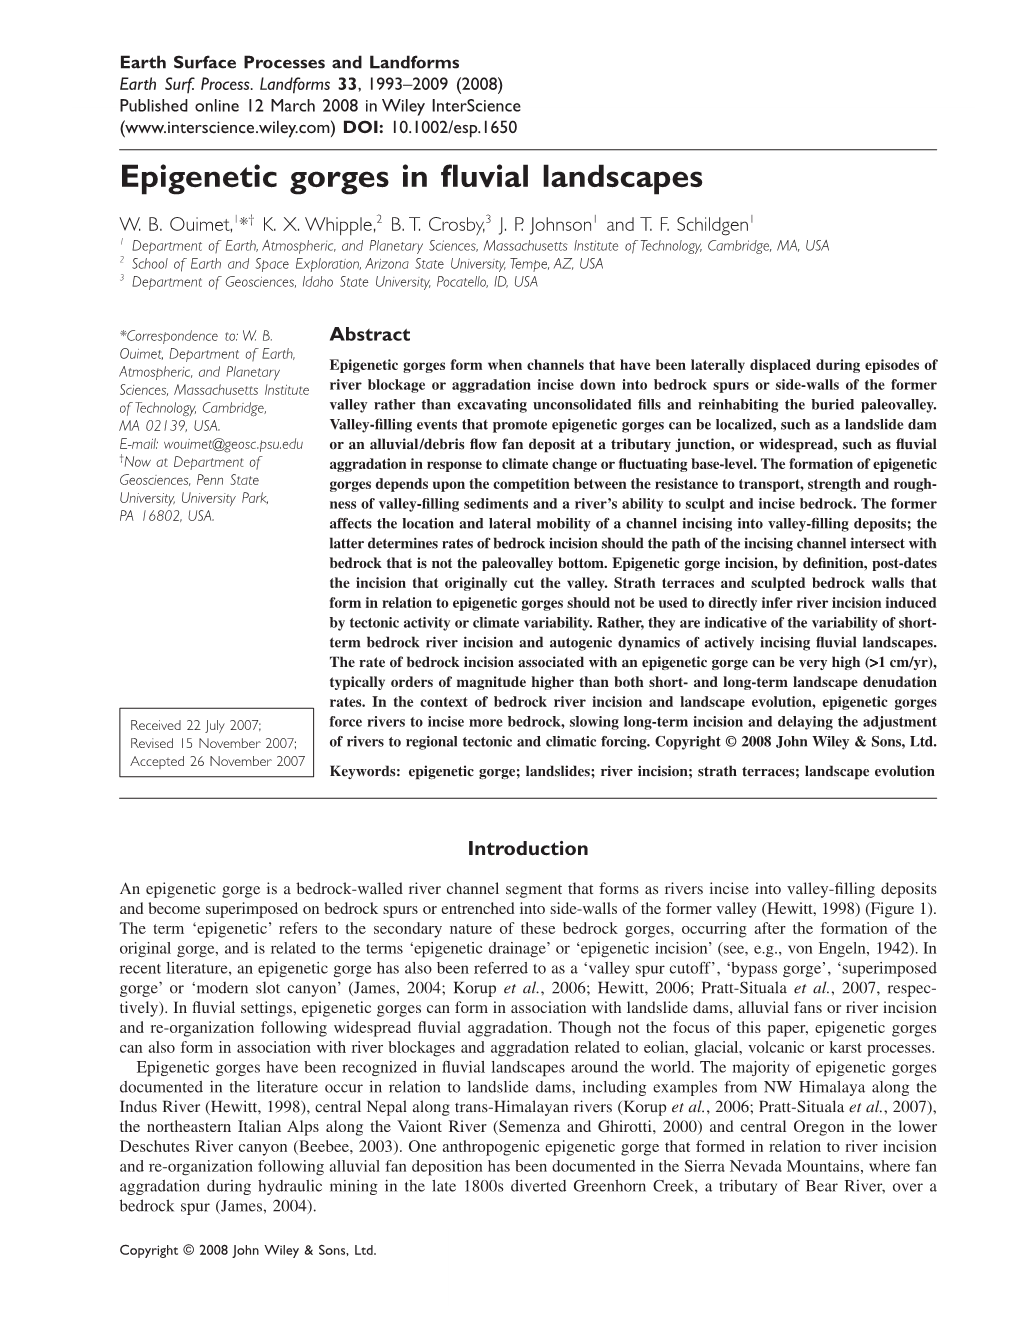 Epigenetic Gorges in Fluvial Landscapes